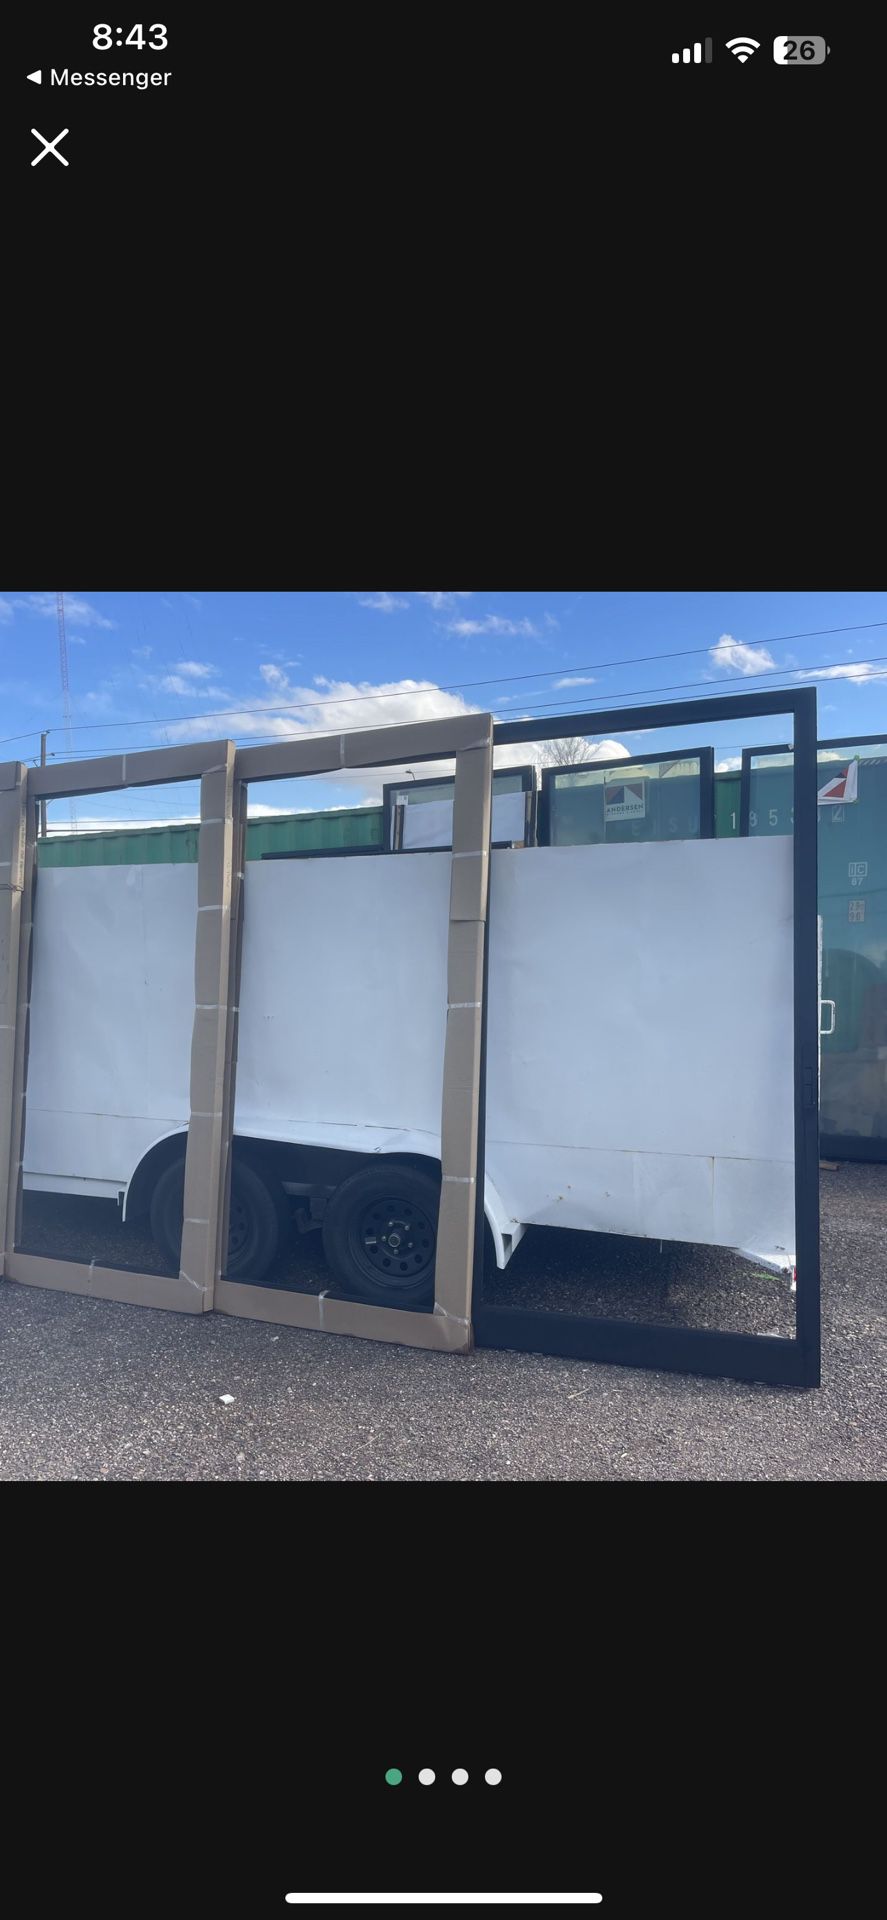 10-multi Slide doors 12’x8’ -3-panels Each $7800 Black 